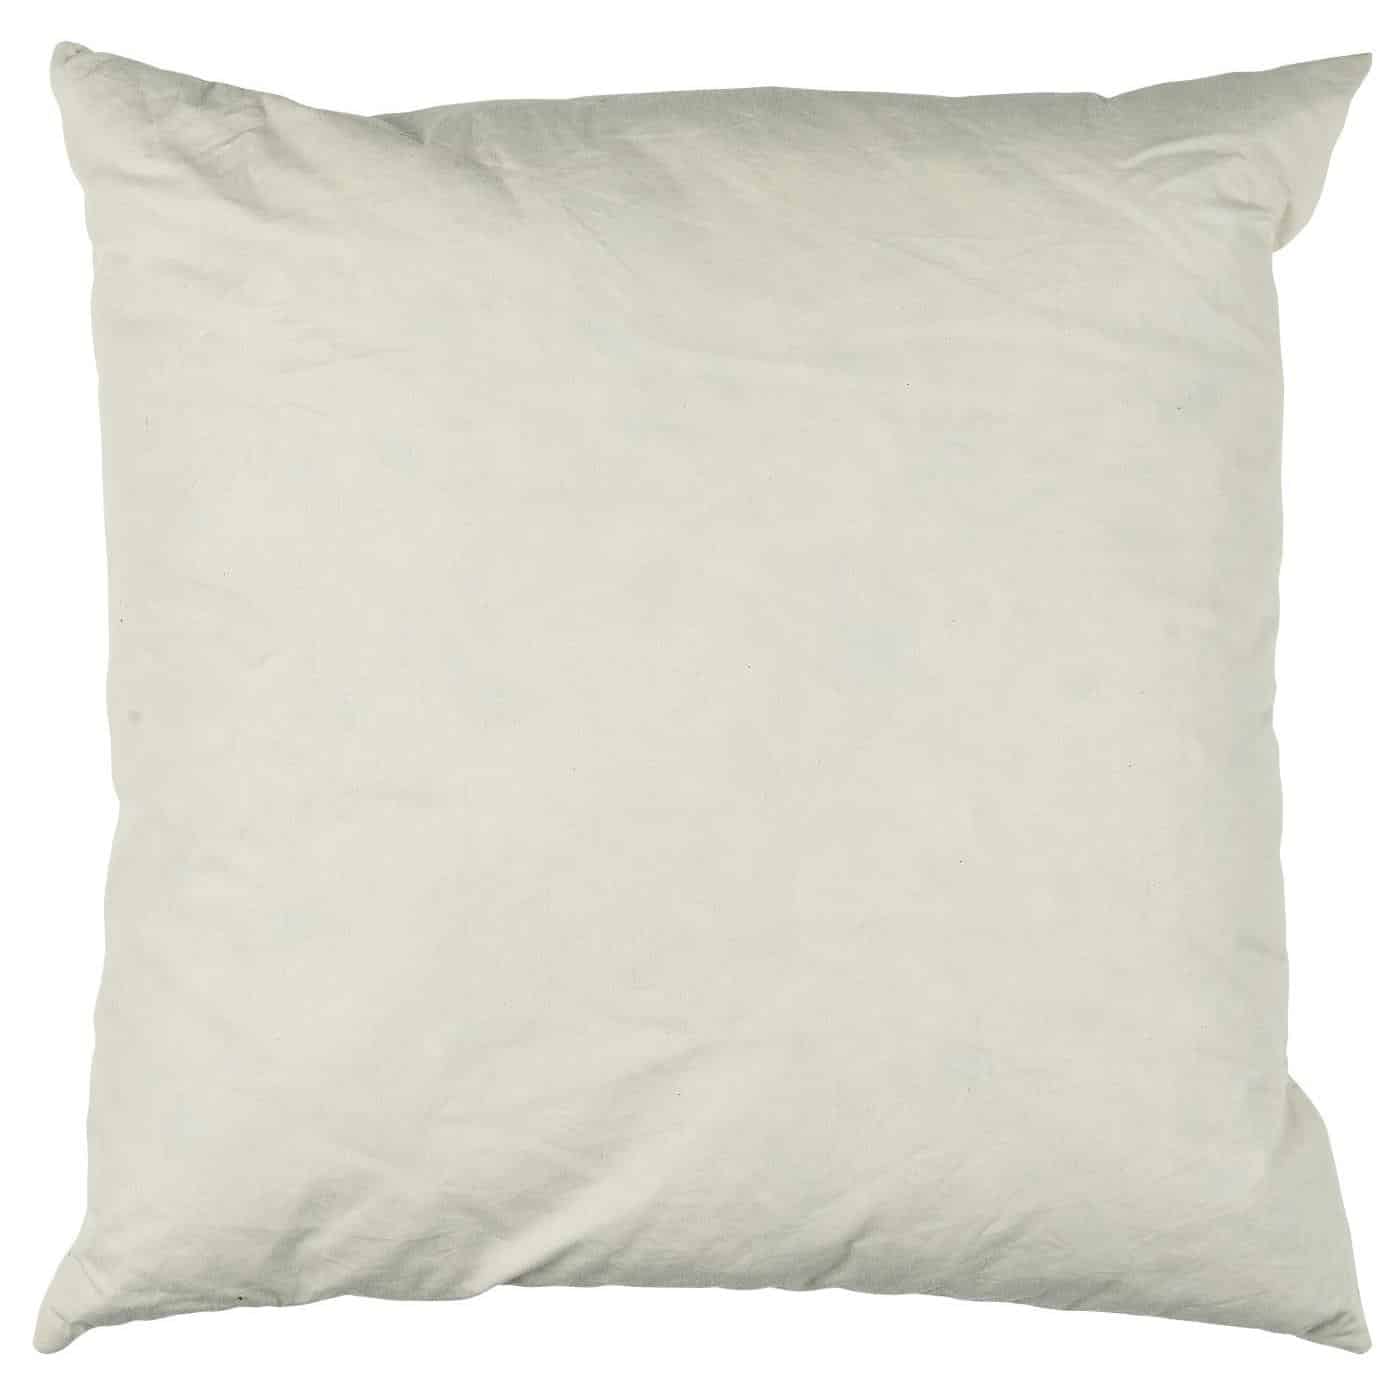 Natural pillow filler, square